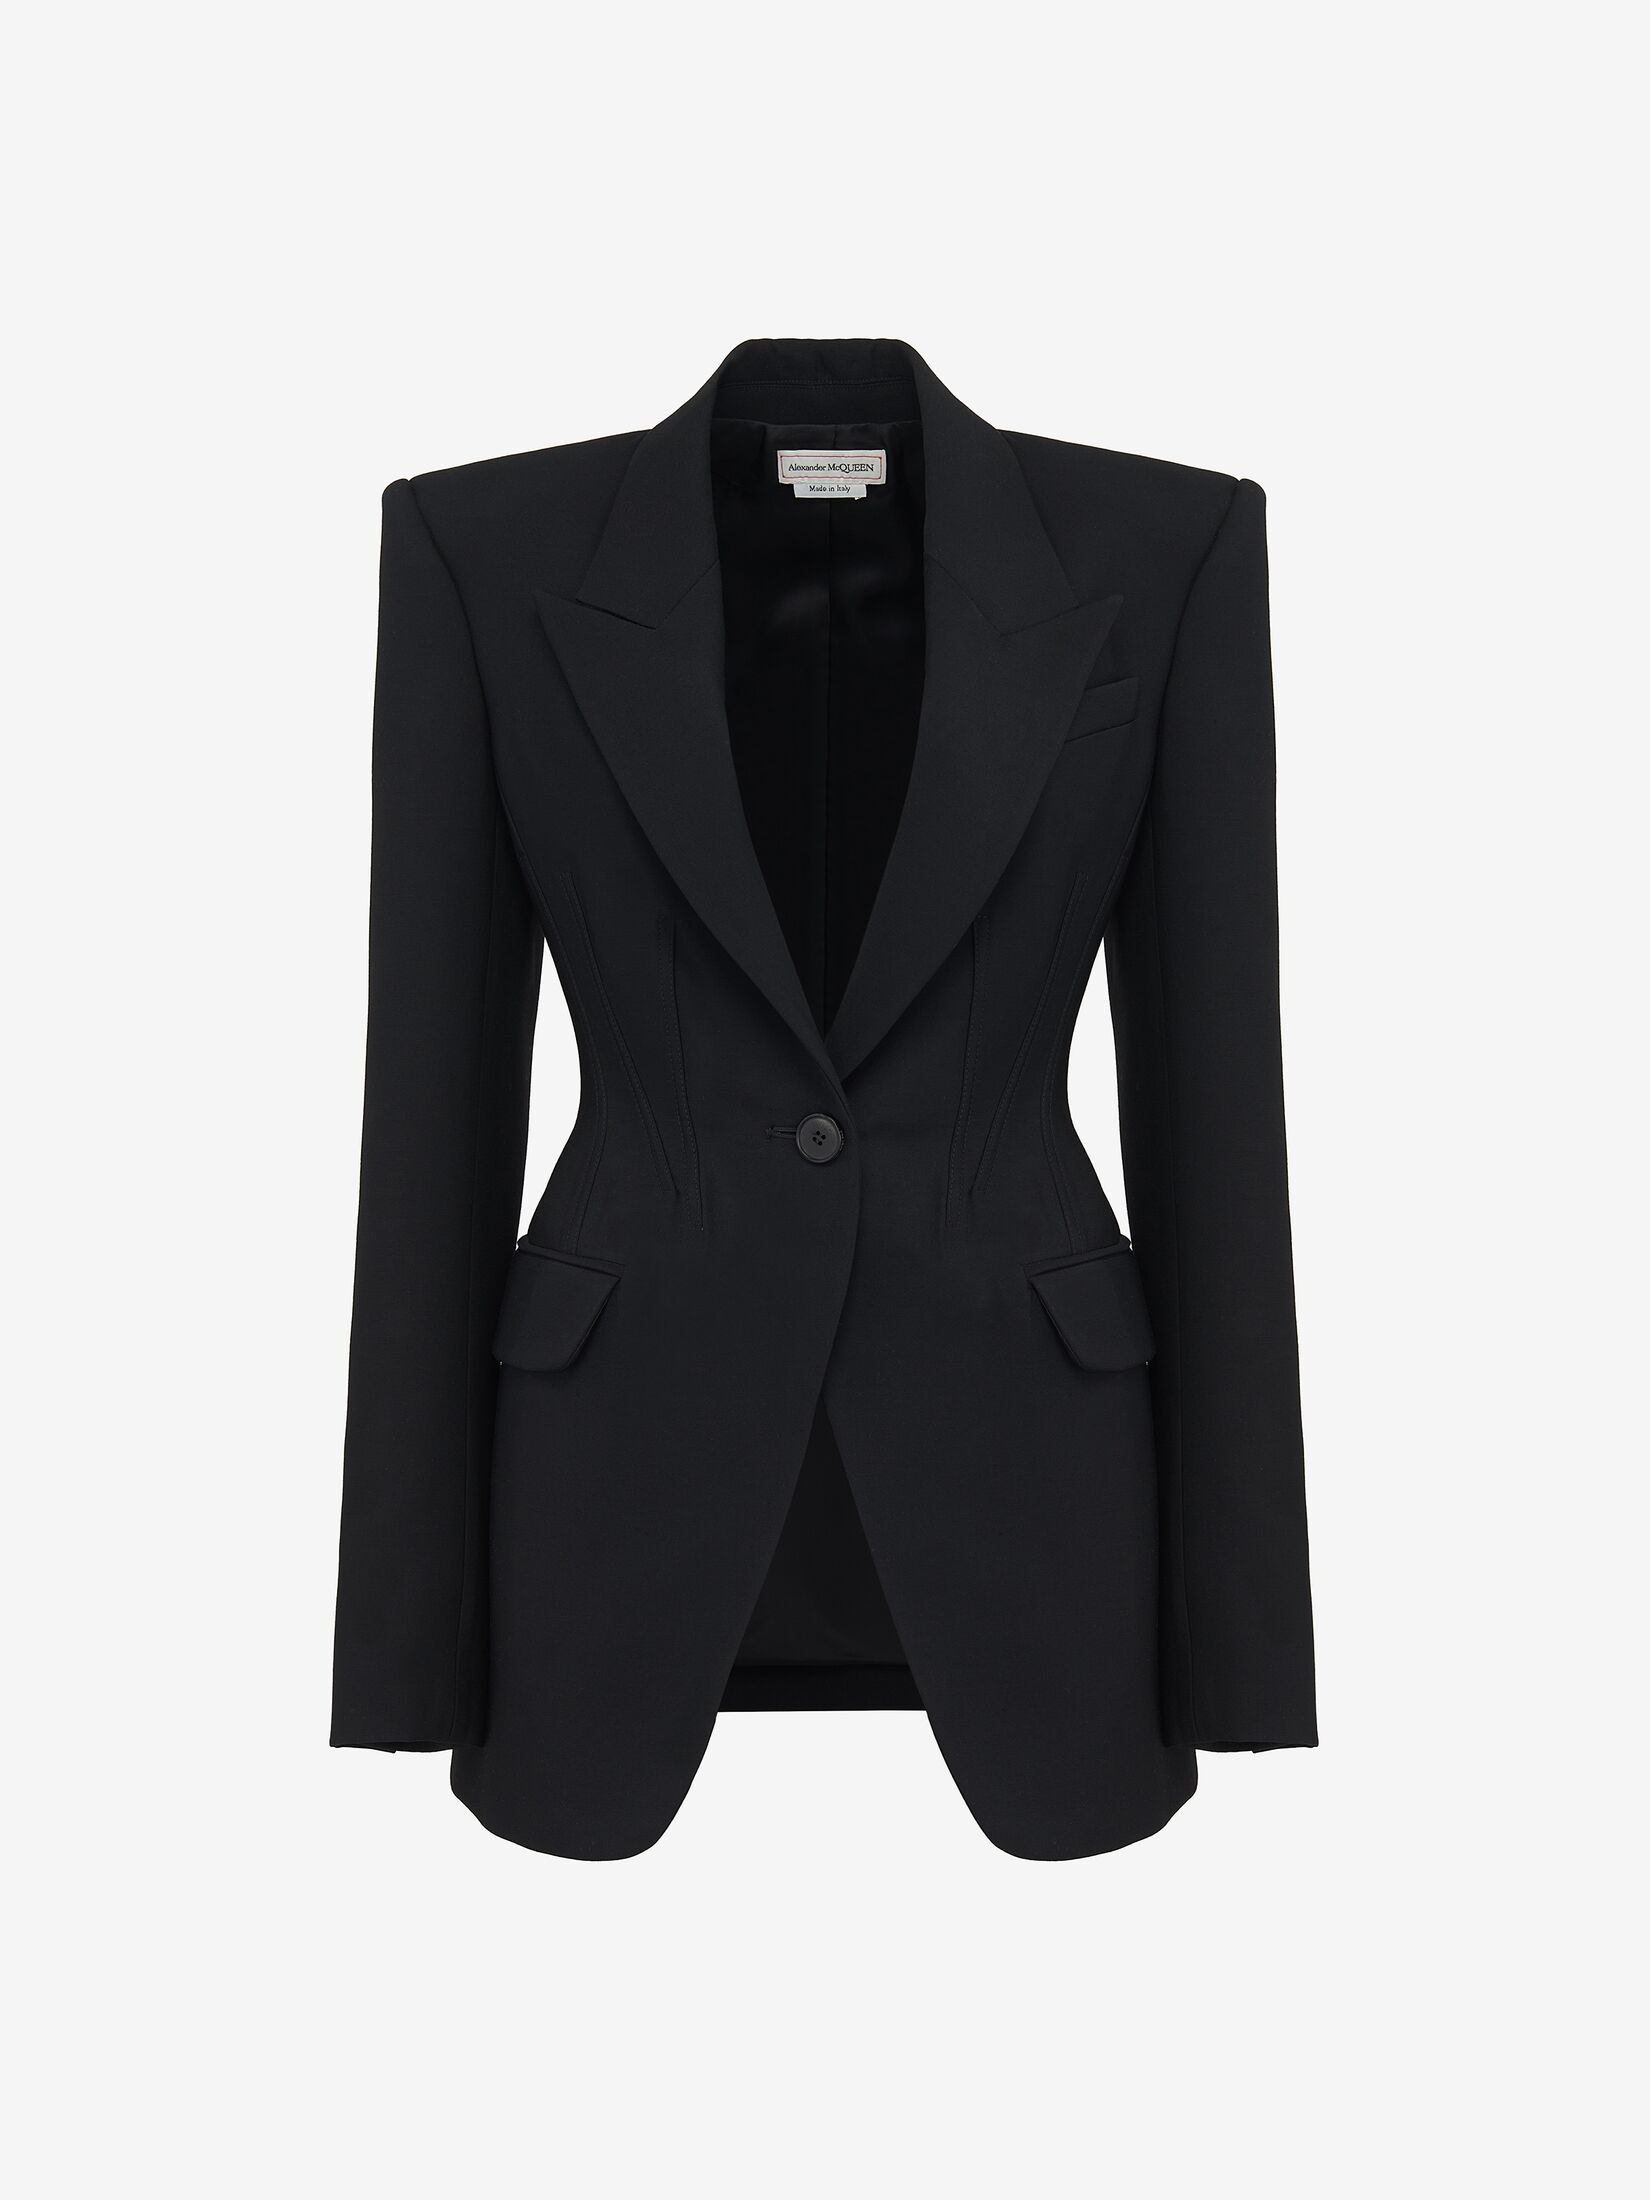 Women's Corset Detail Jacket in Black - 1